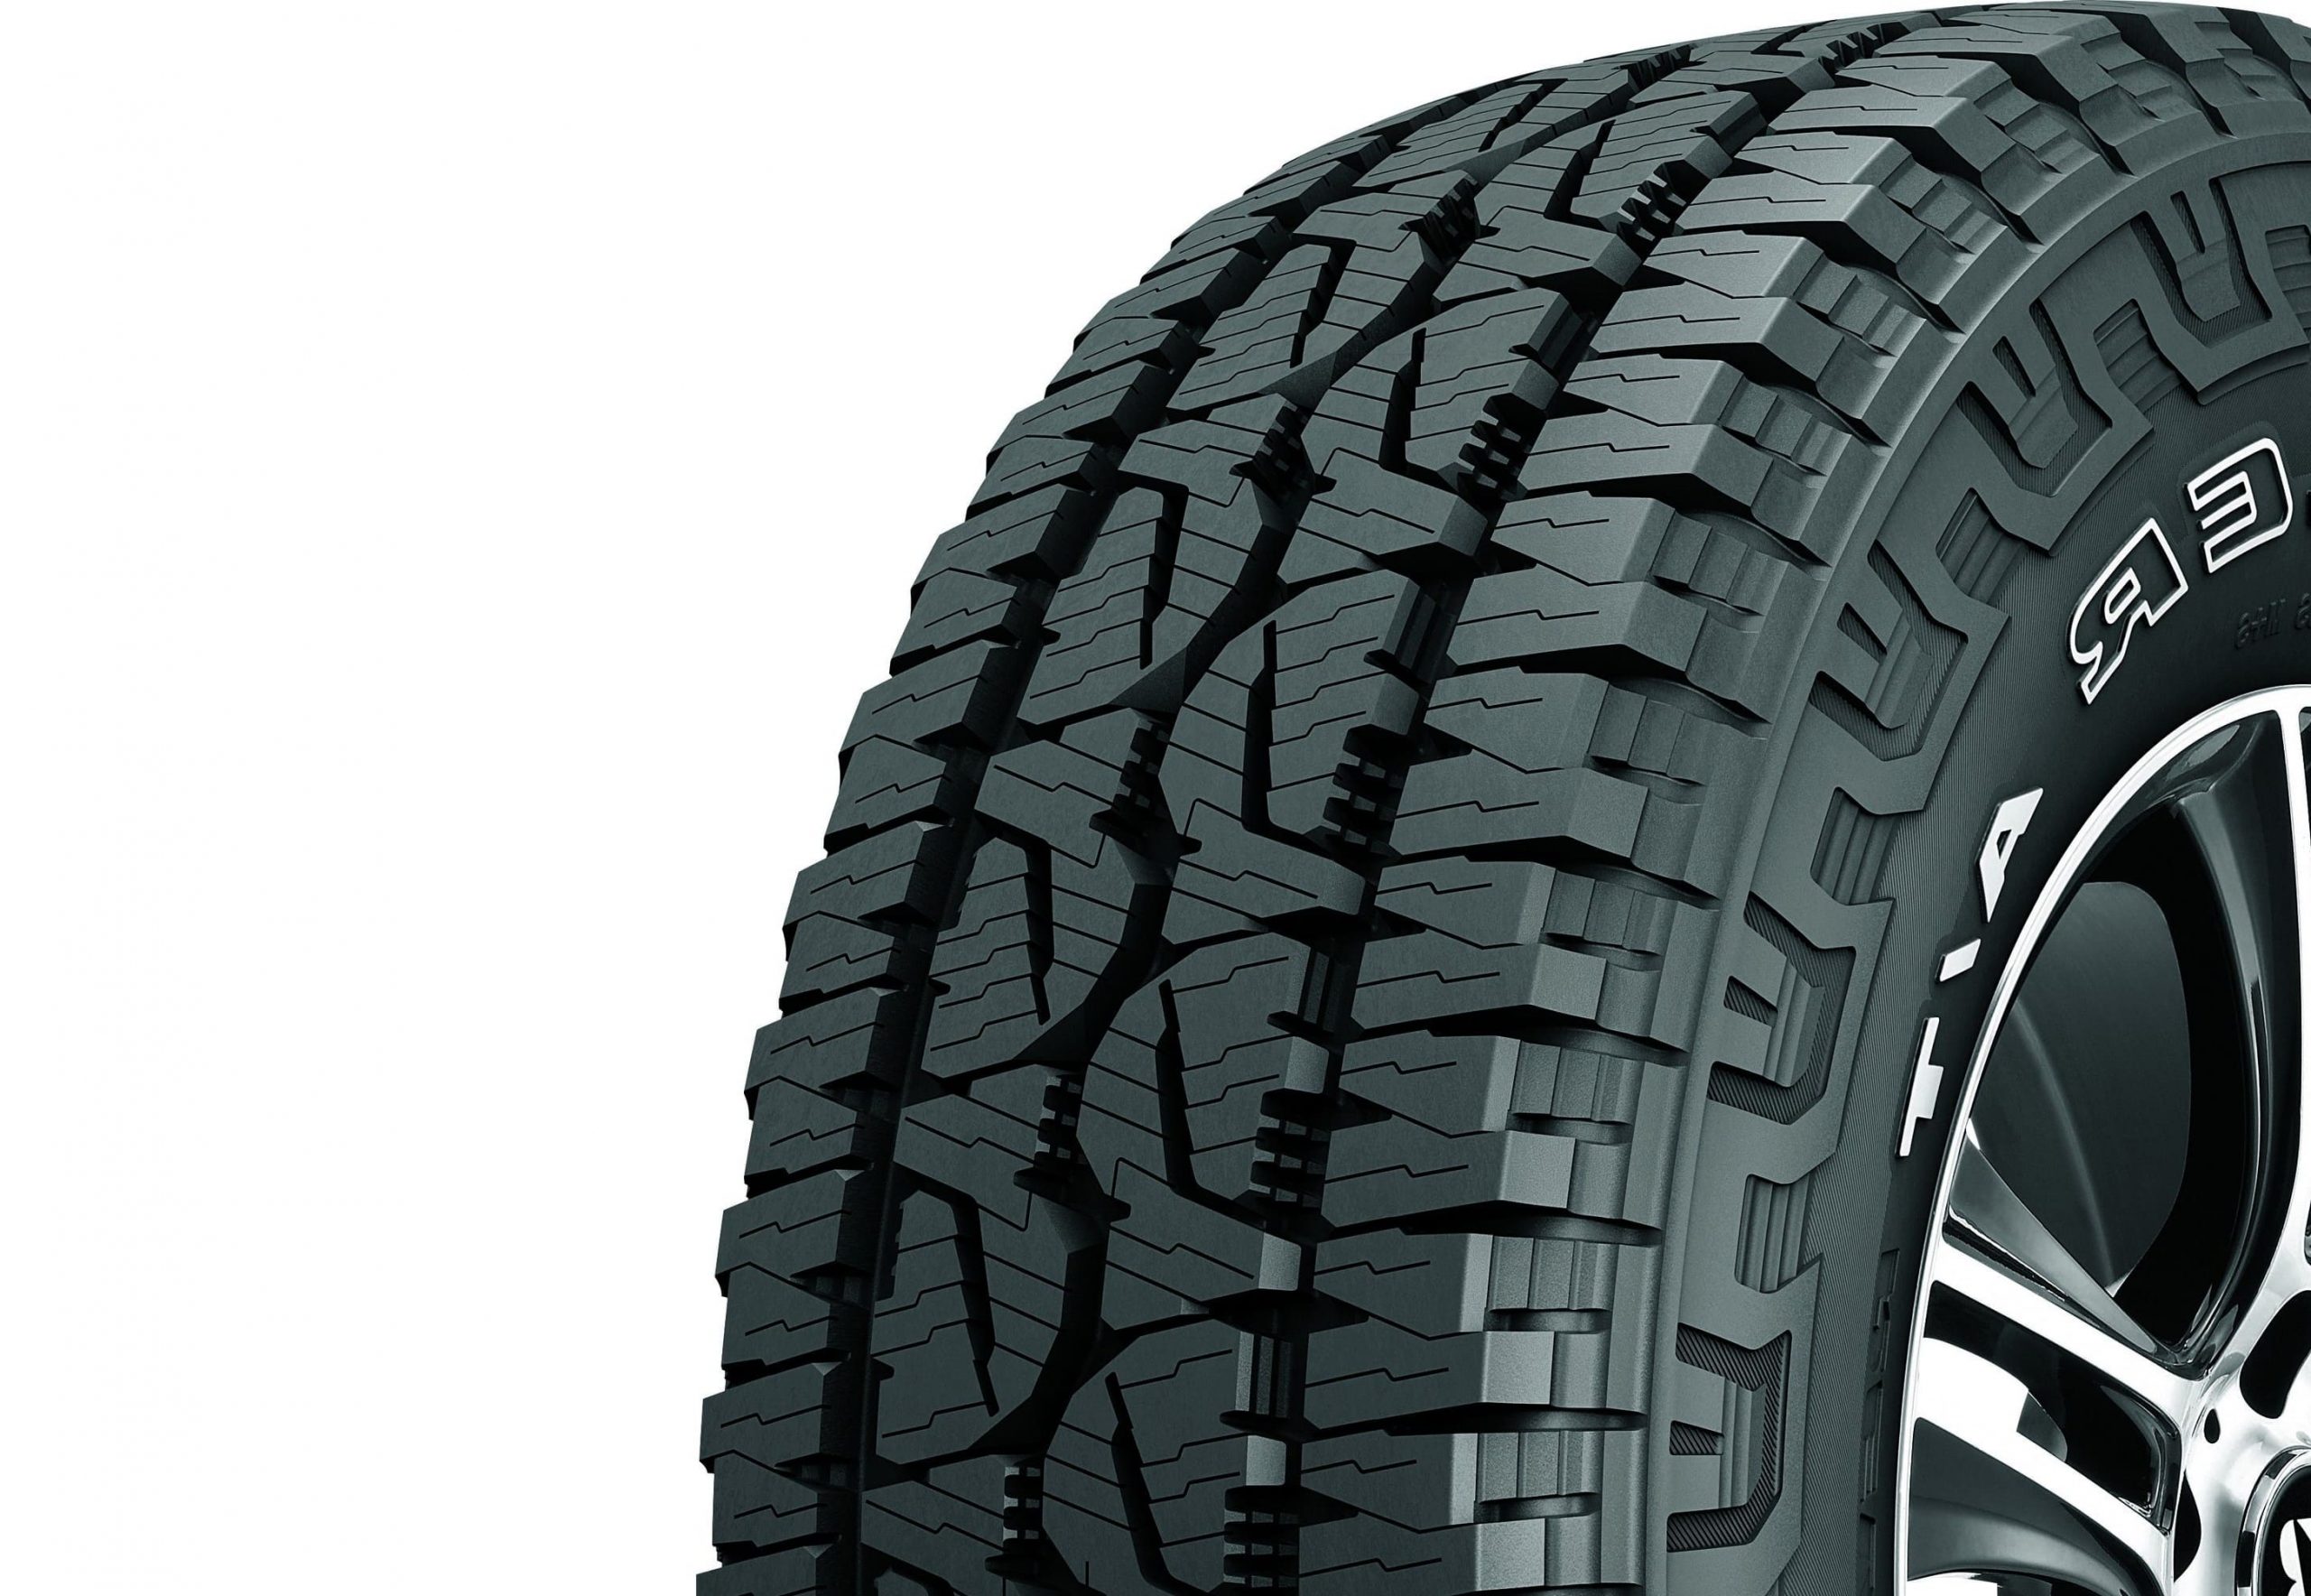 bridgestone-dueler-a-t-revo-3-tire-review-tire-space-tires-reviews-all-brands